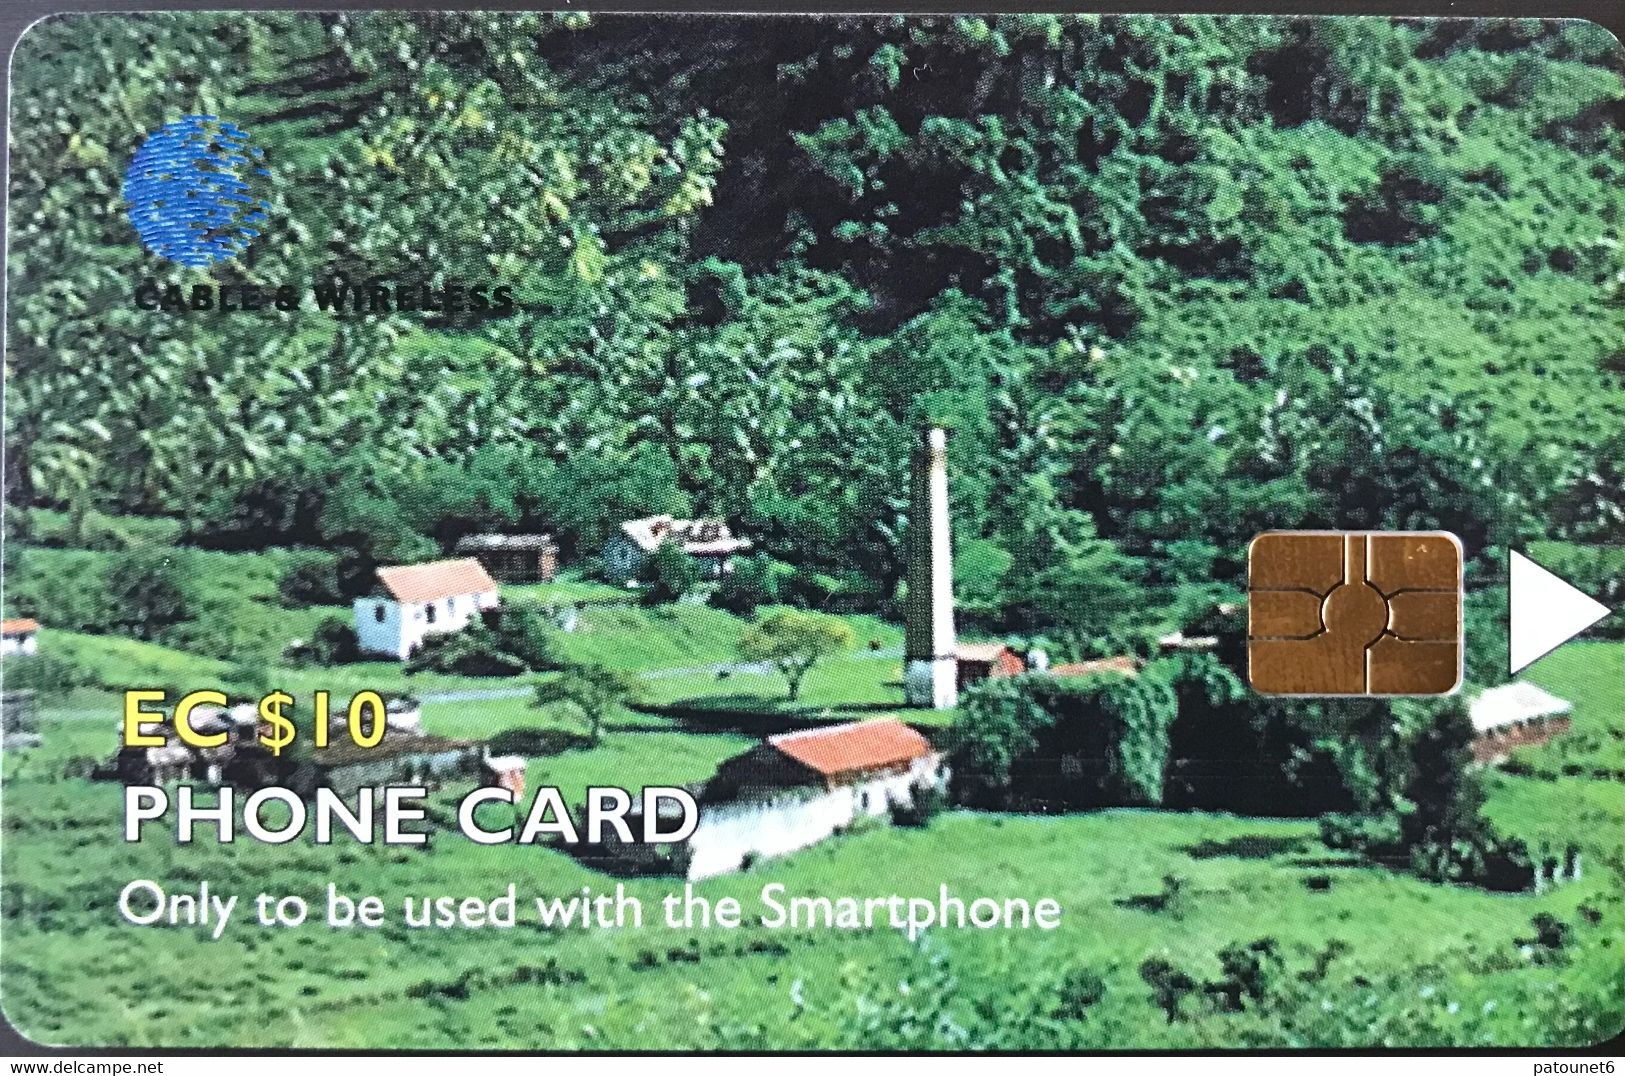 St Vincent & The Grenadines  -  Phonecard  - 1763, Water Powered Suger  -   EC $ 10 - San Vicente Y Las Granadinas